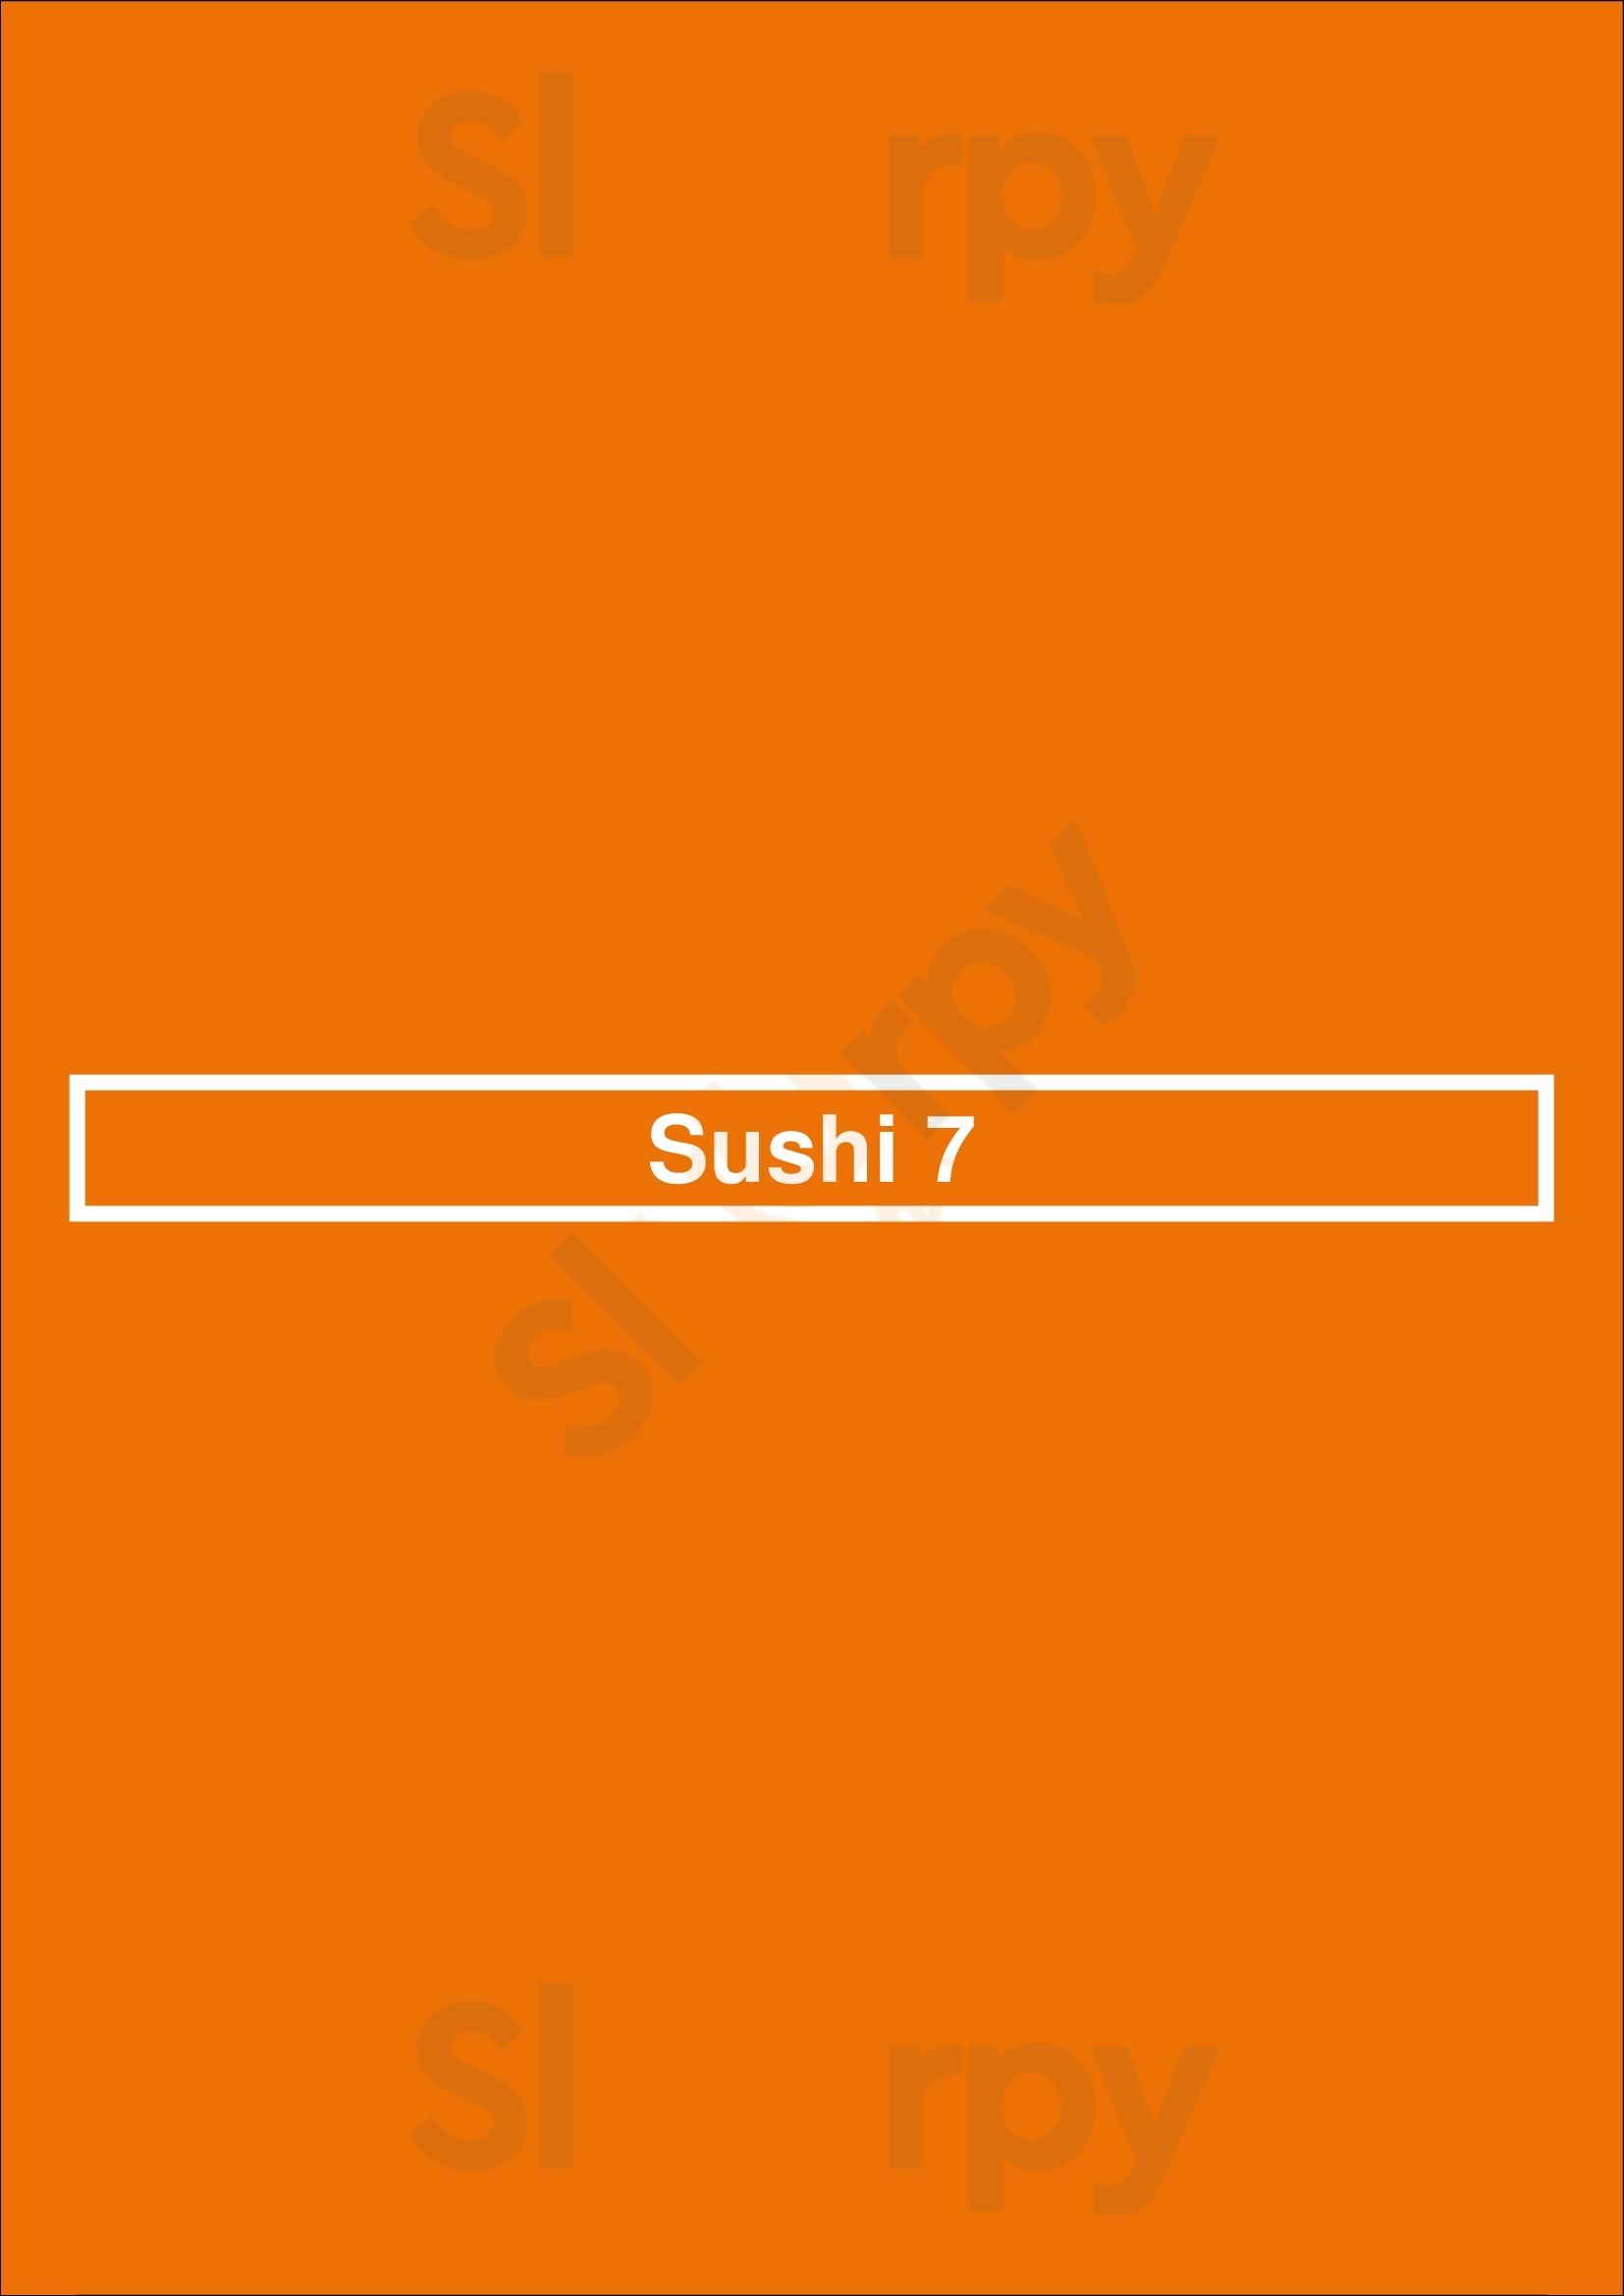 Sushi 7 Vancouver Menu - 1